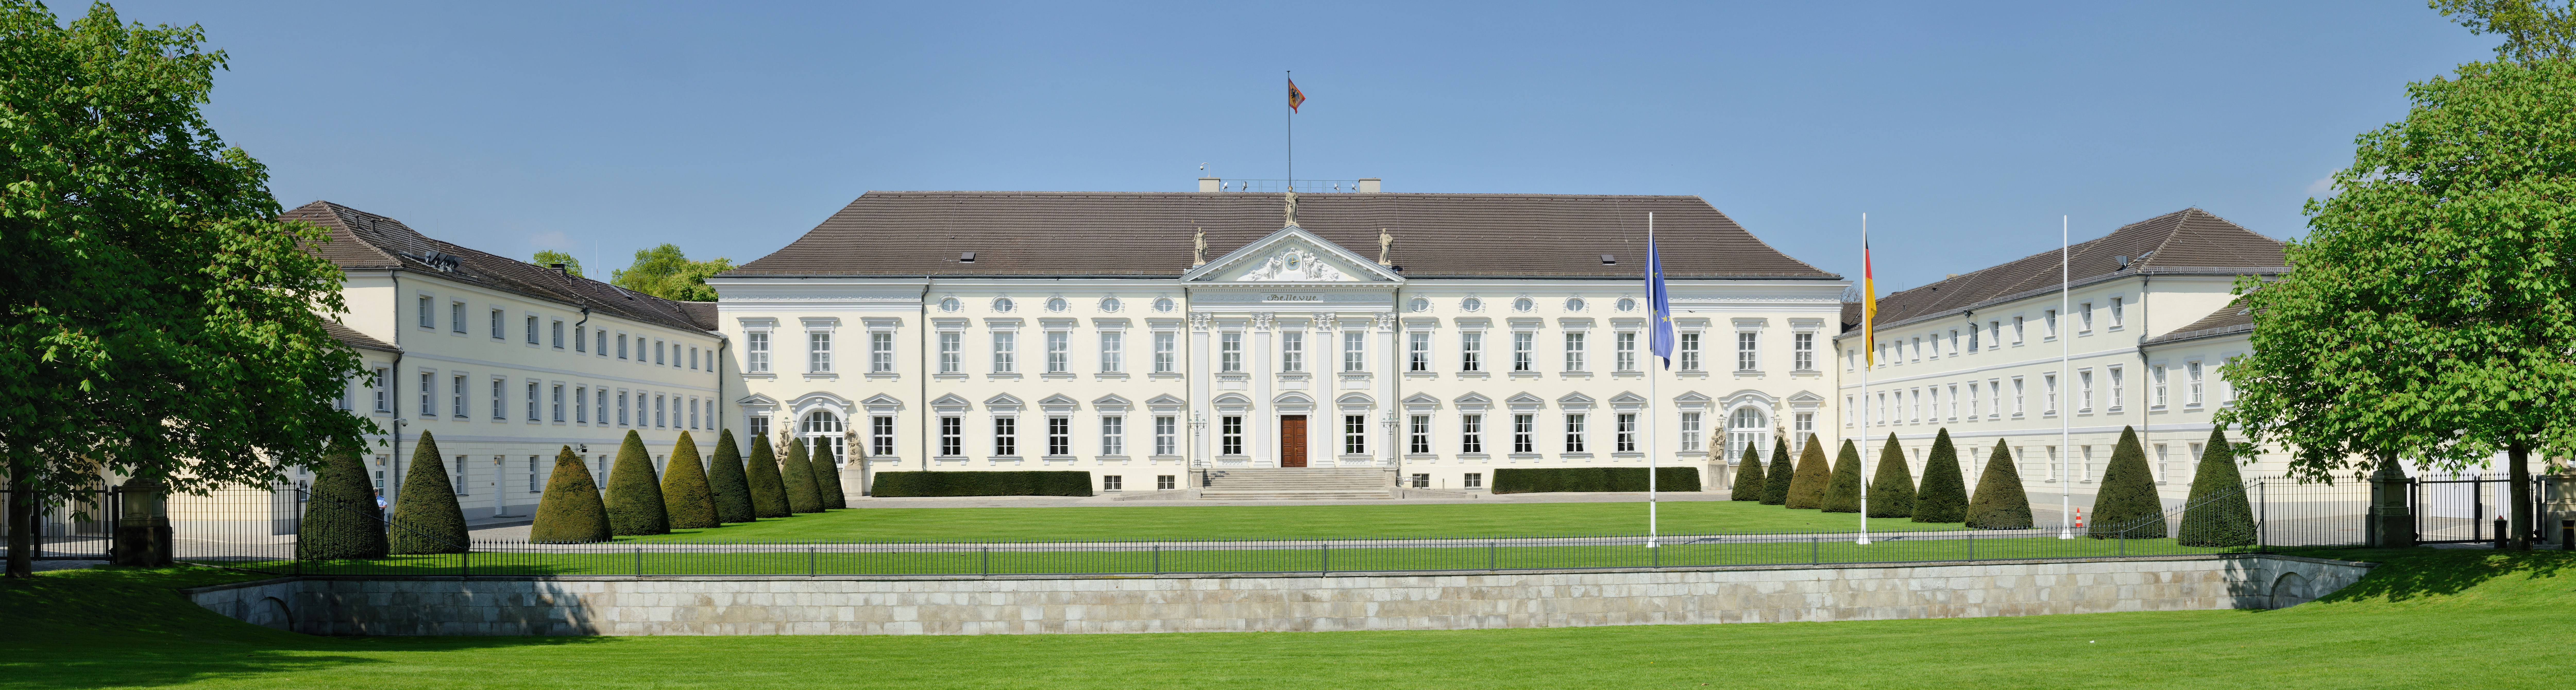 Bellevue Palace (Germany) #10